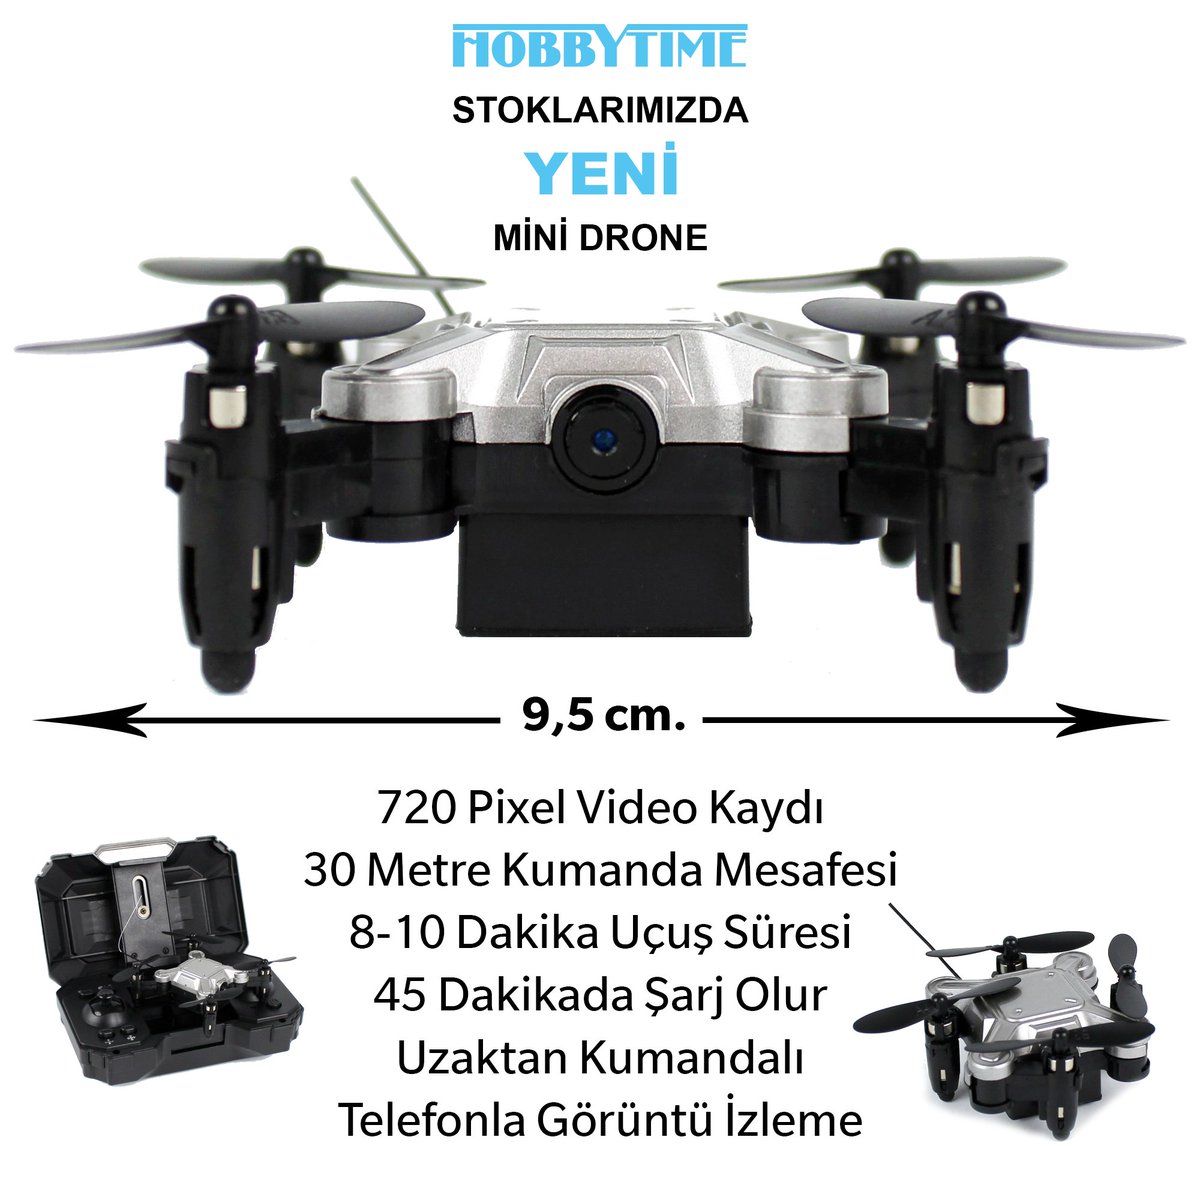 Stoklarımızda 9,5 cm. 720 Pixel Video Kaydı Yapabilen Mini Drone

hobbytime.com.tr/daheng-120-2.4…

#drone #minidrone #hobbytime